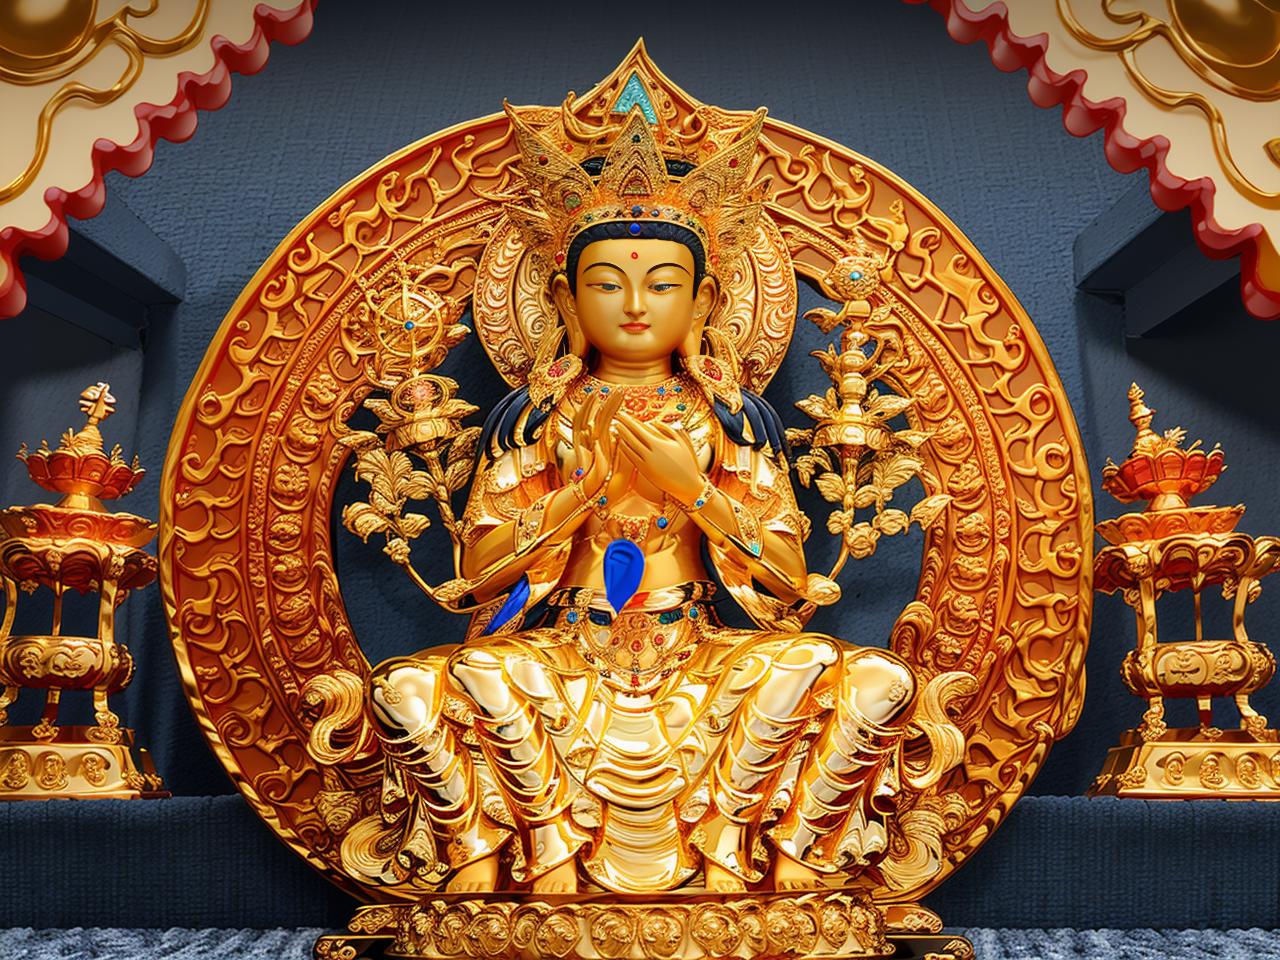 Heavenly Crown Maitreya Bodhisattva image by tasibigshot529